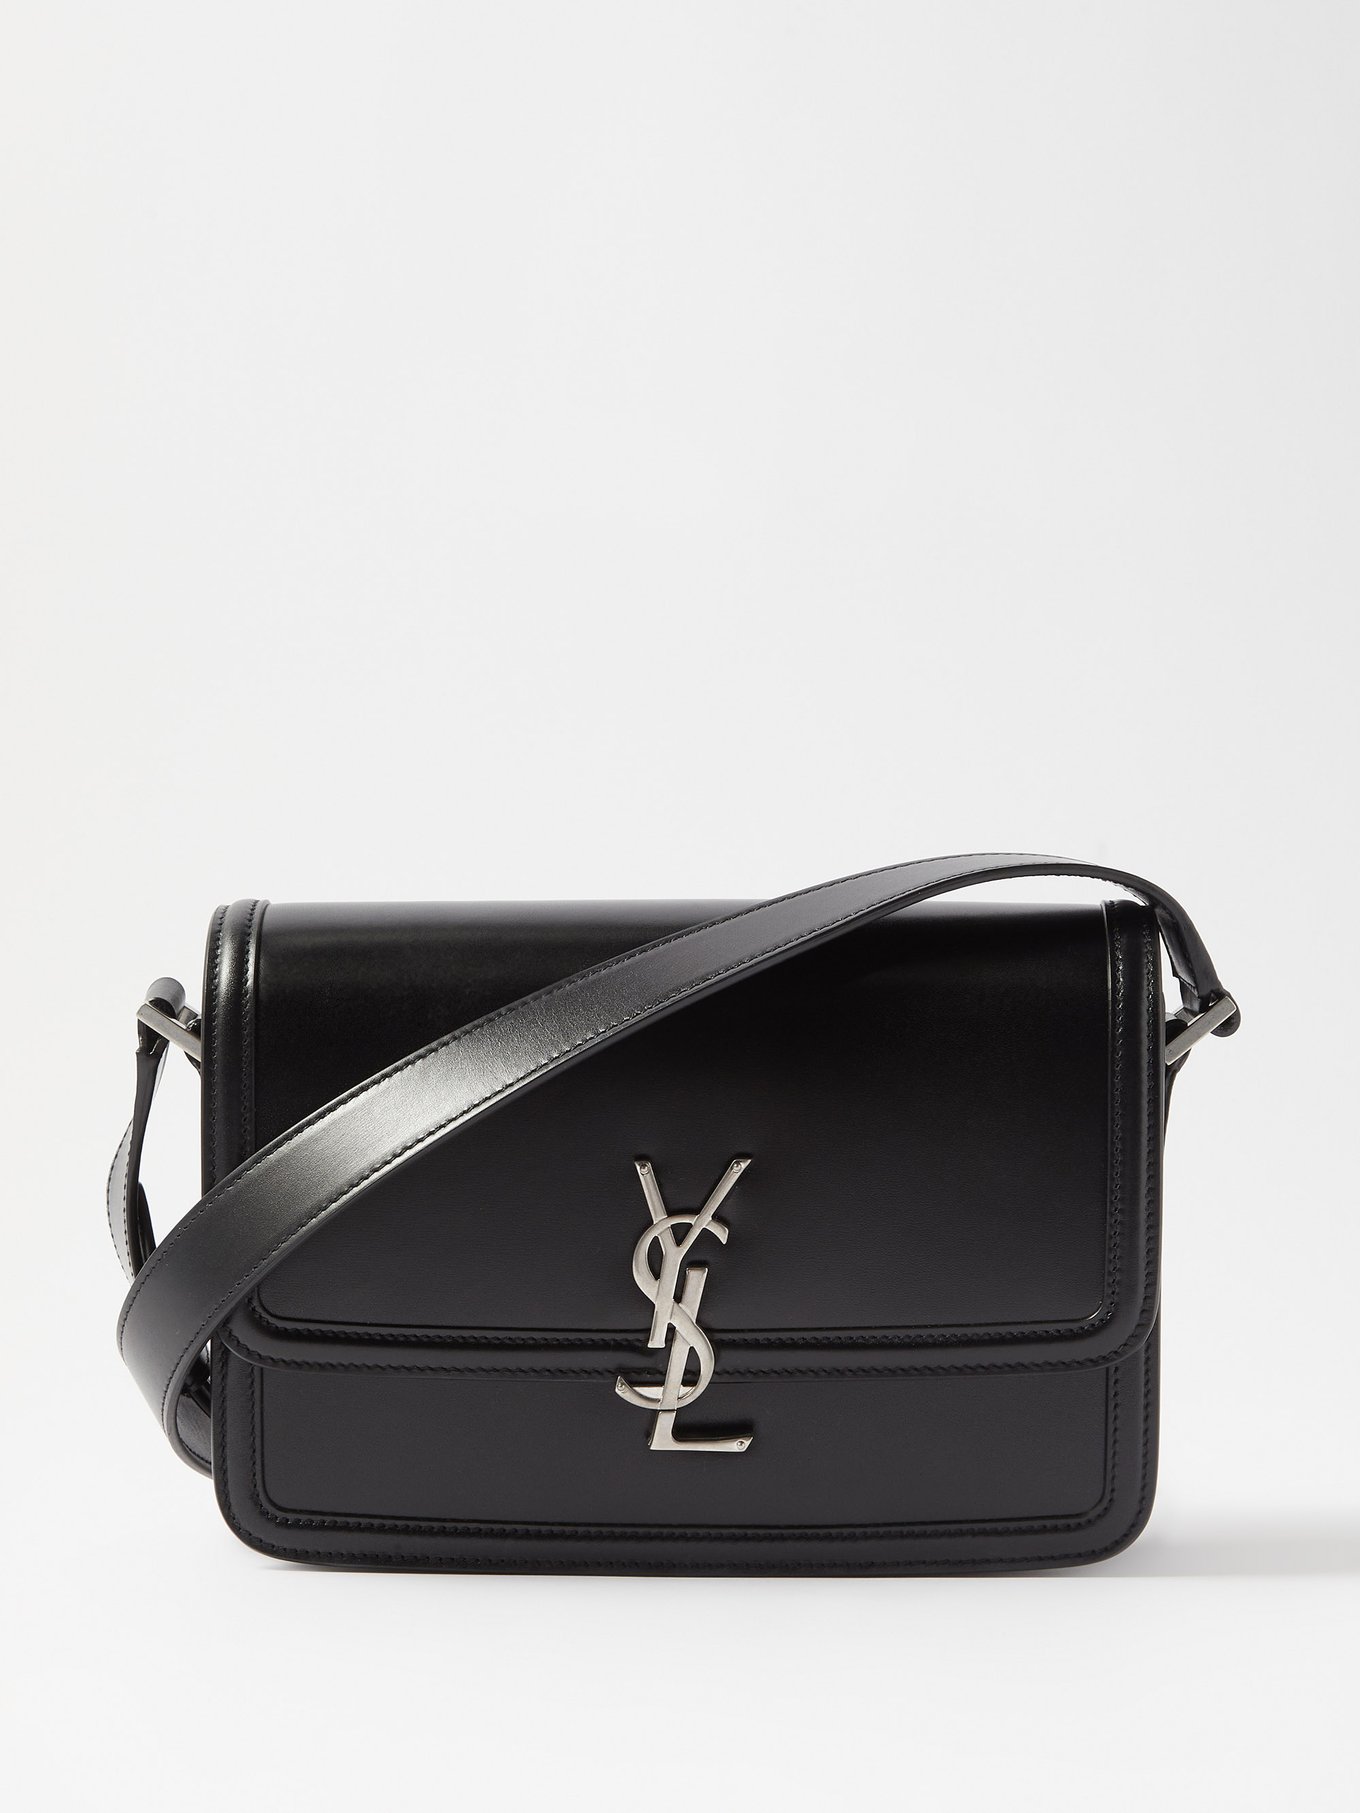 Black Solferino medium YSL-plaque leather shoulder bag, Saint Laurent